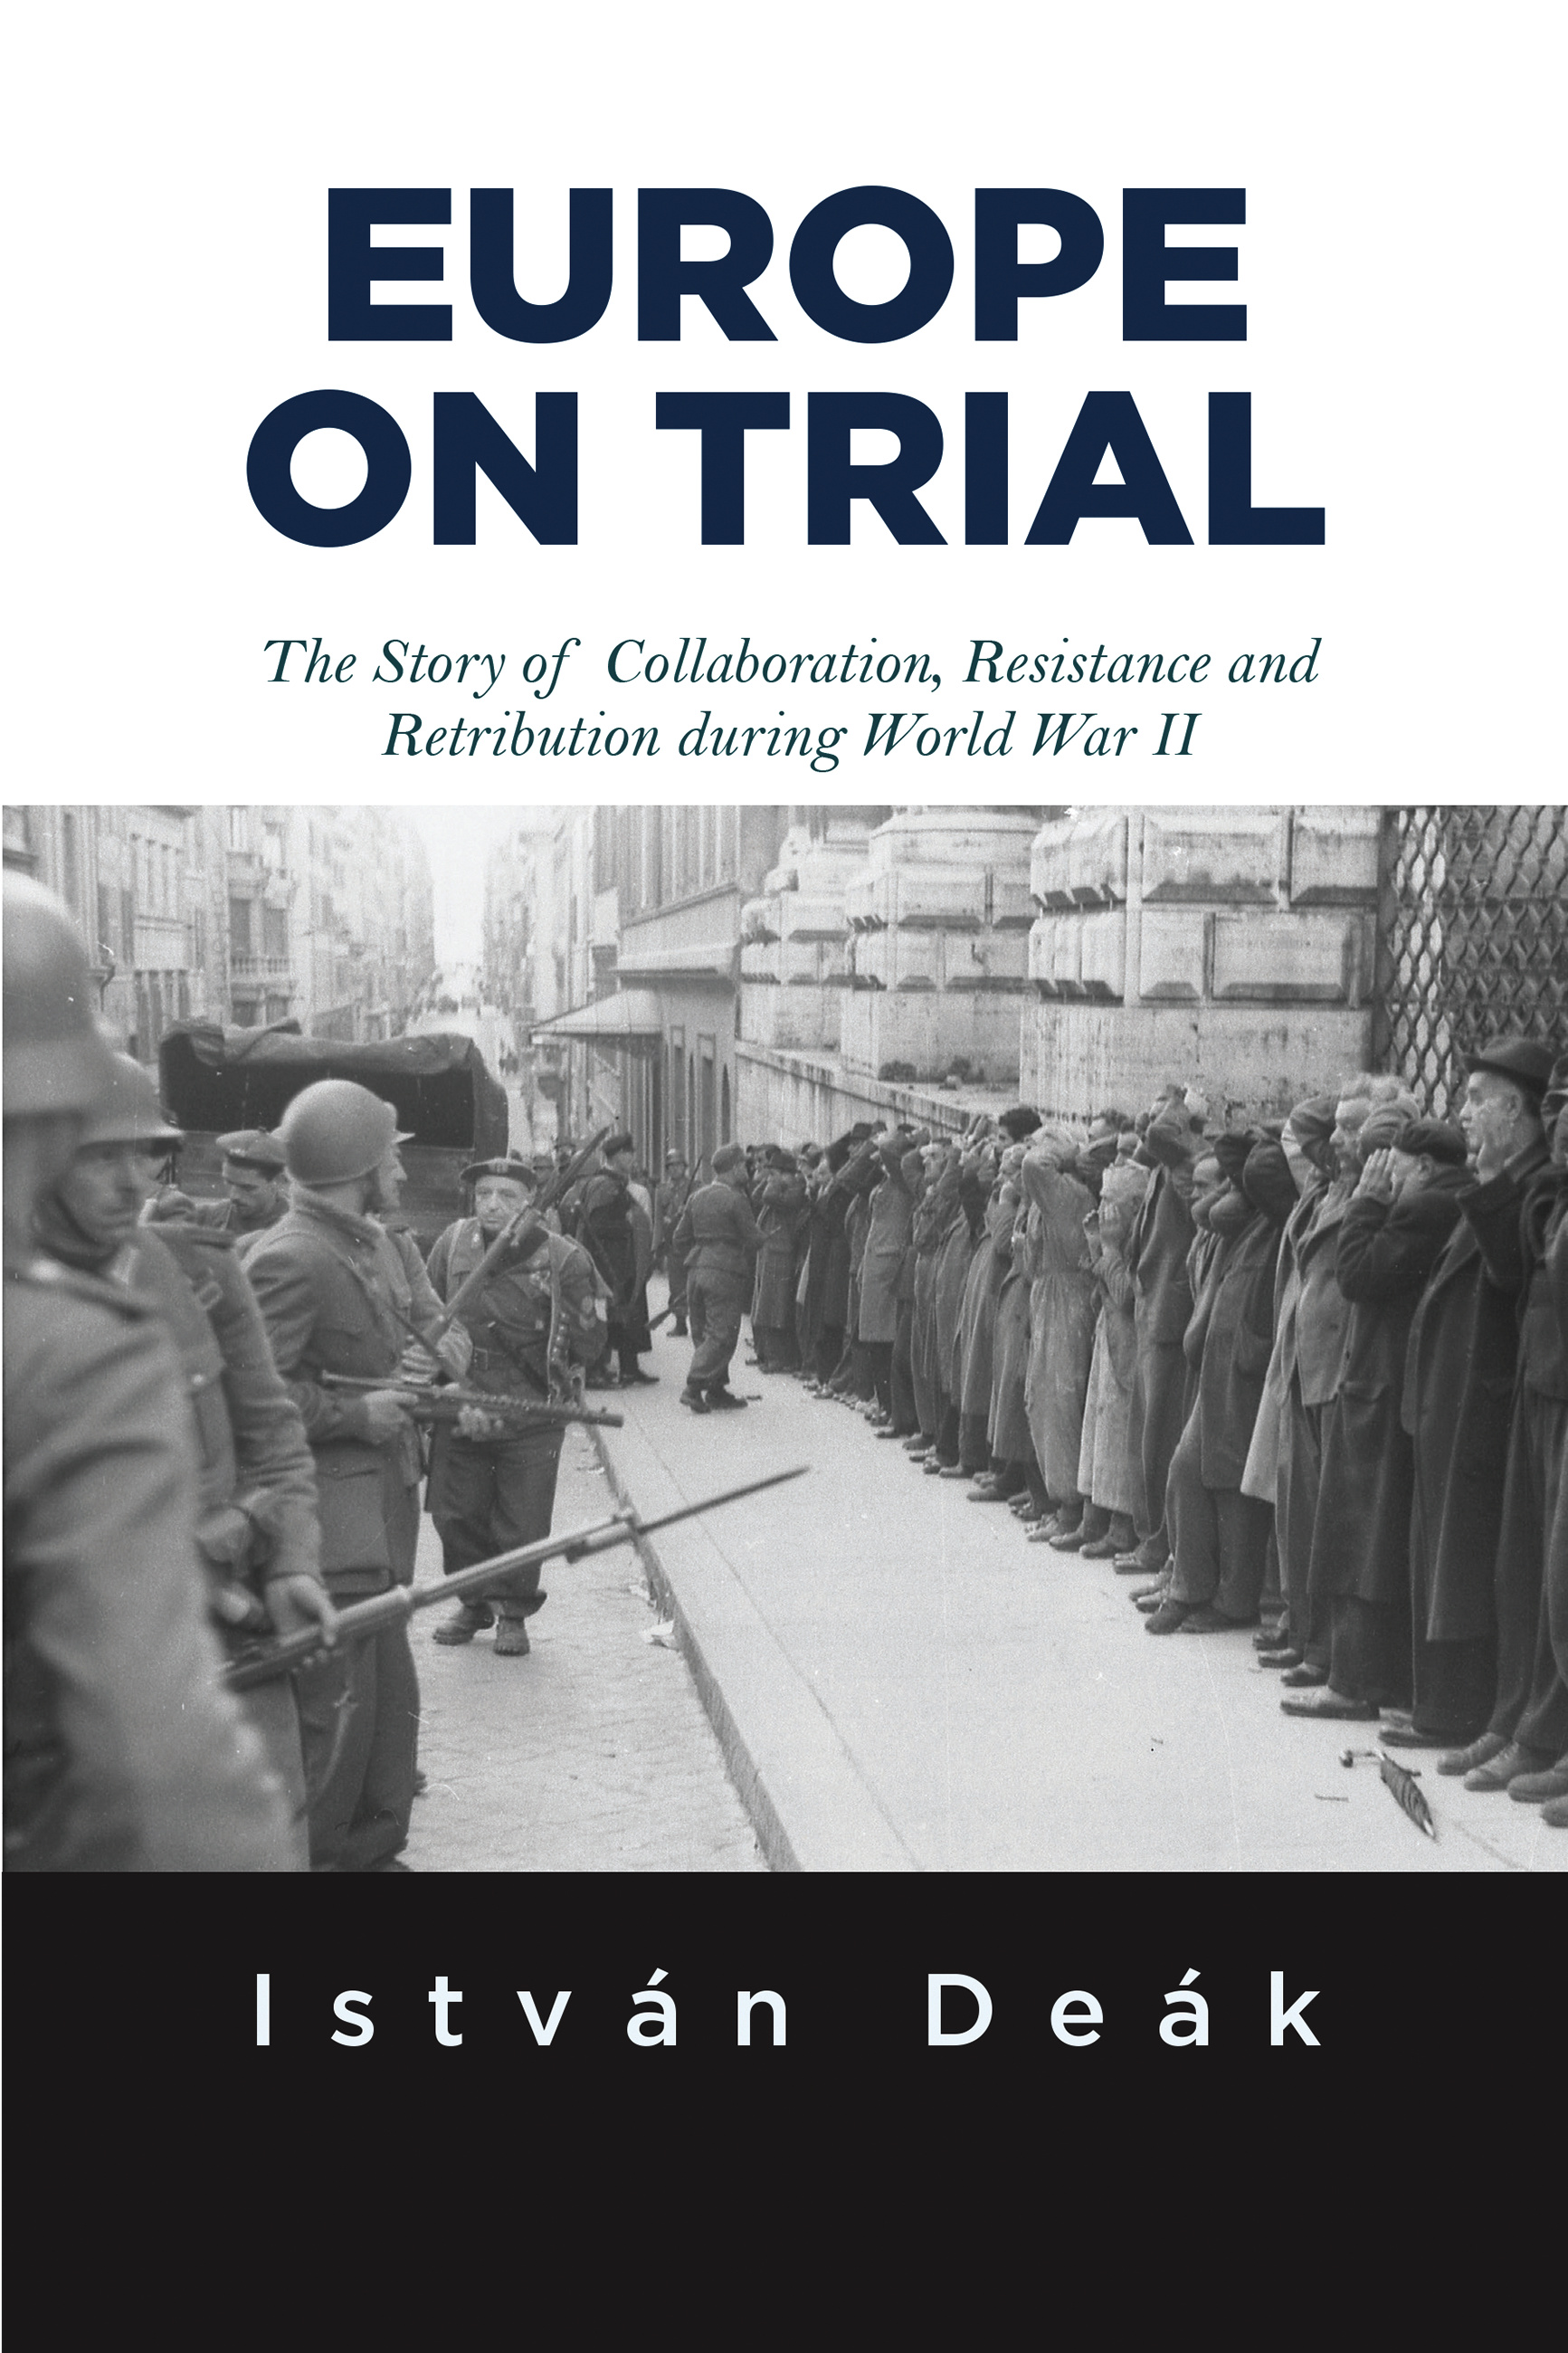 Hachette　Book　on　Europe　Trial　Deak　by　Istvan　Group